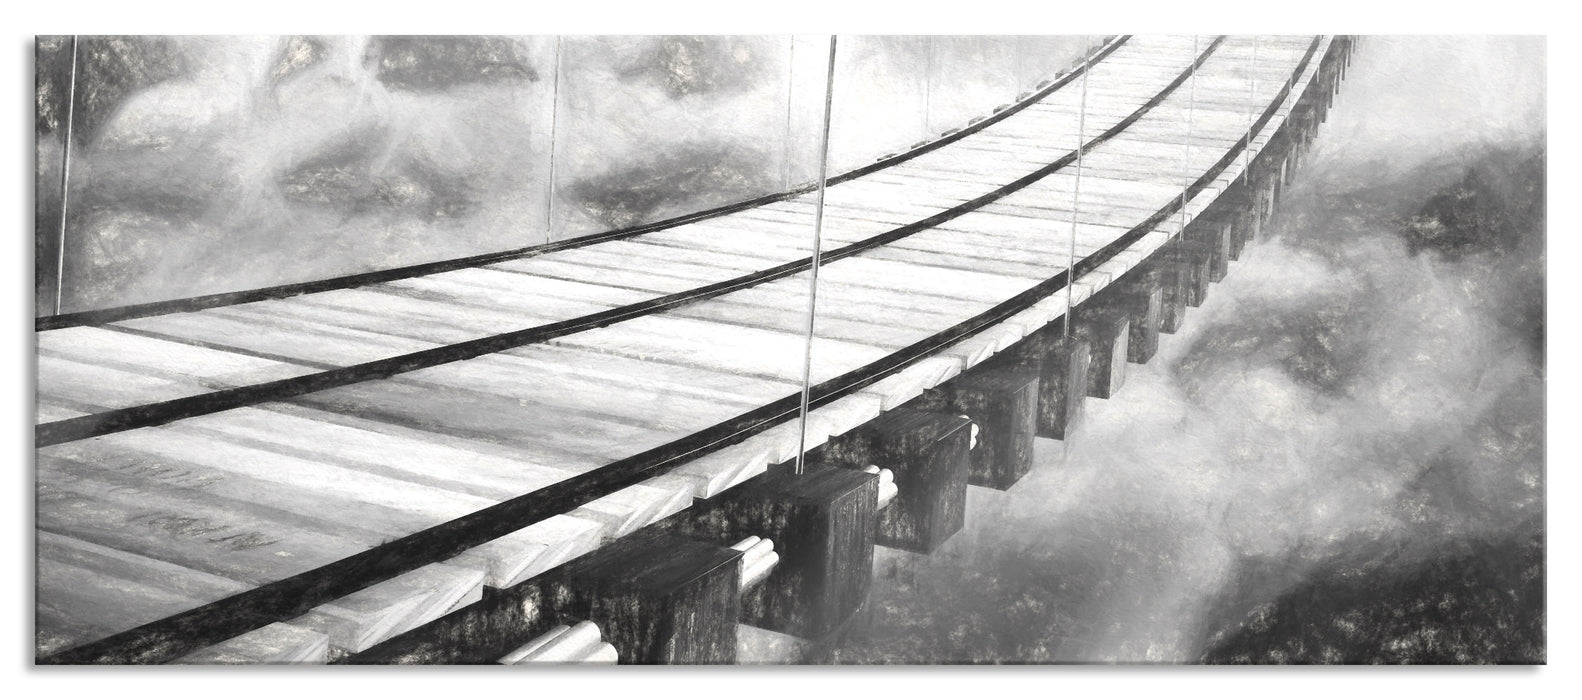 Hölzerne Brücke in den Wolken, Glasbild Panorama